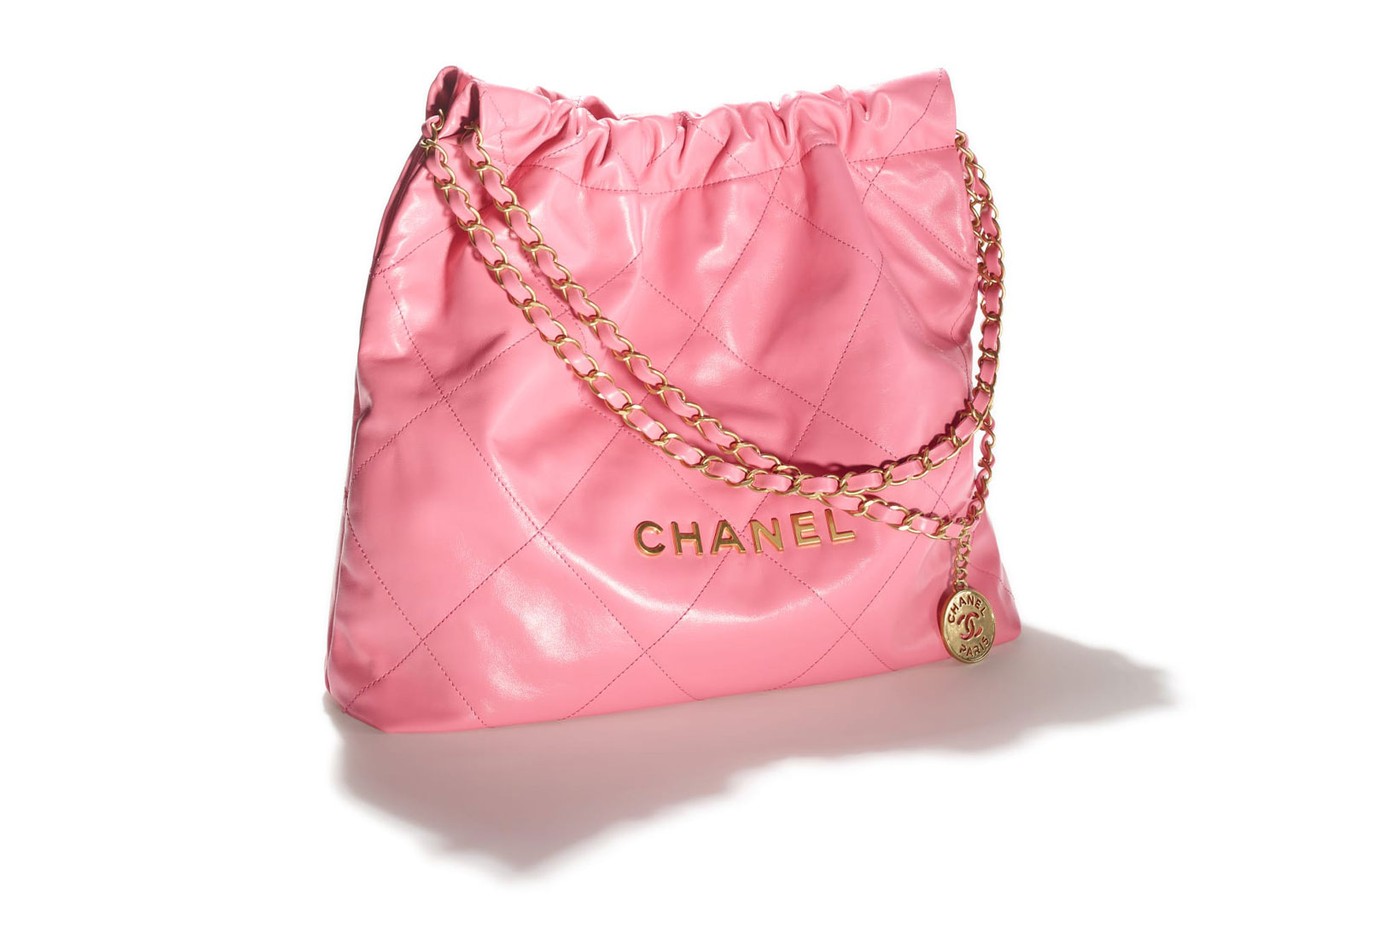 Виржини Виар представила новую сумку Chanel (фото 3)